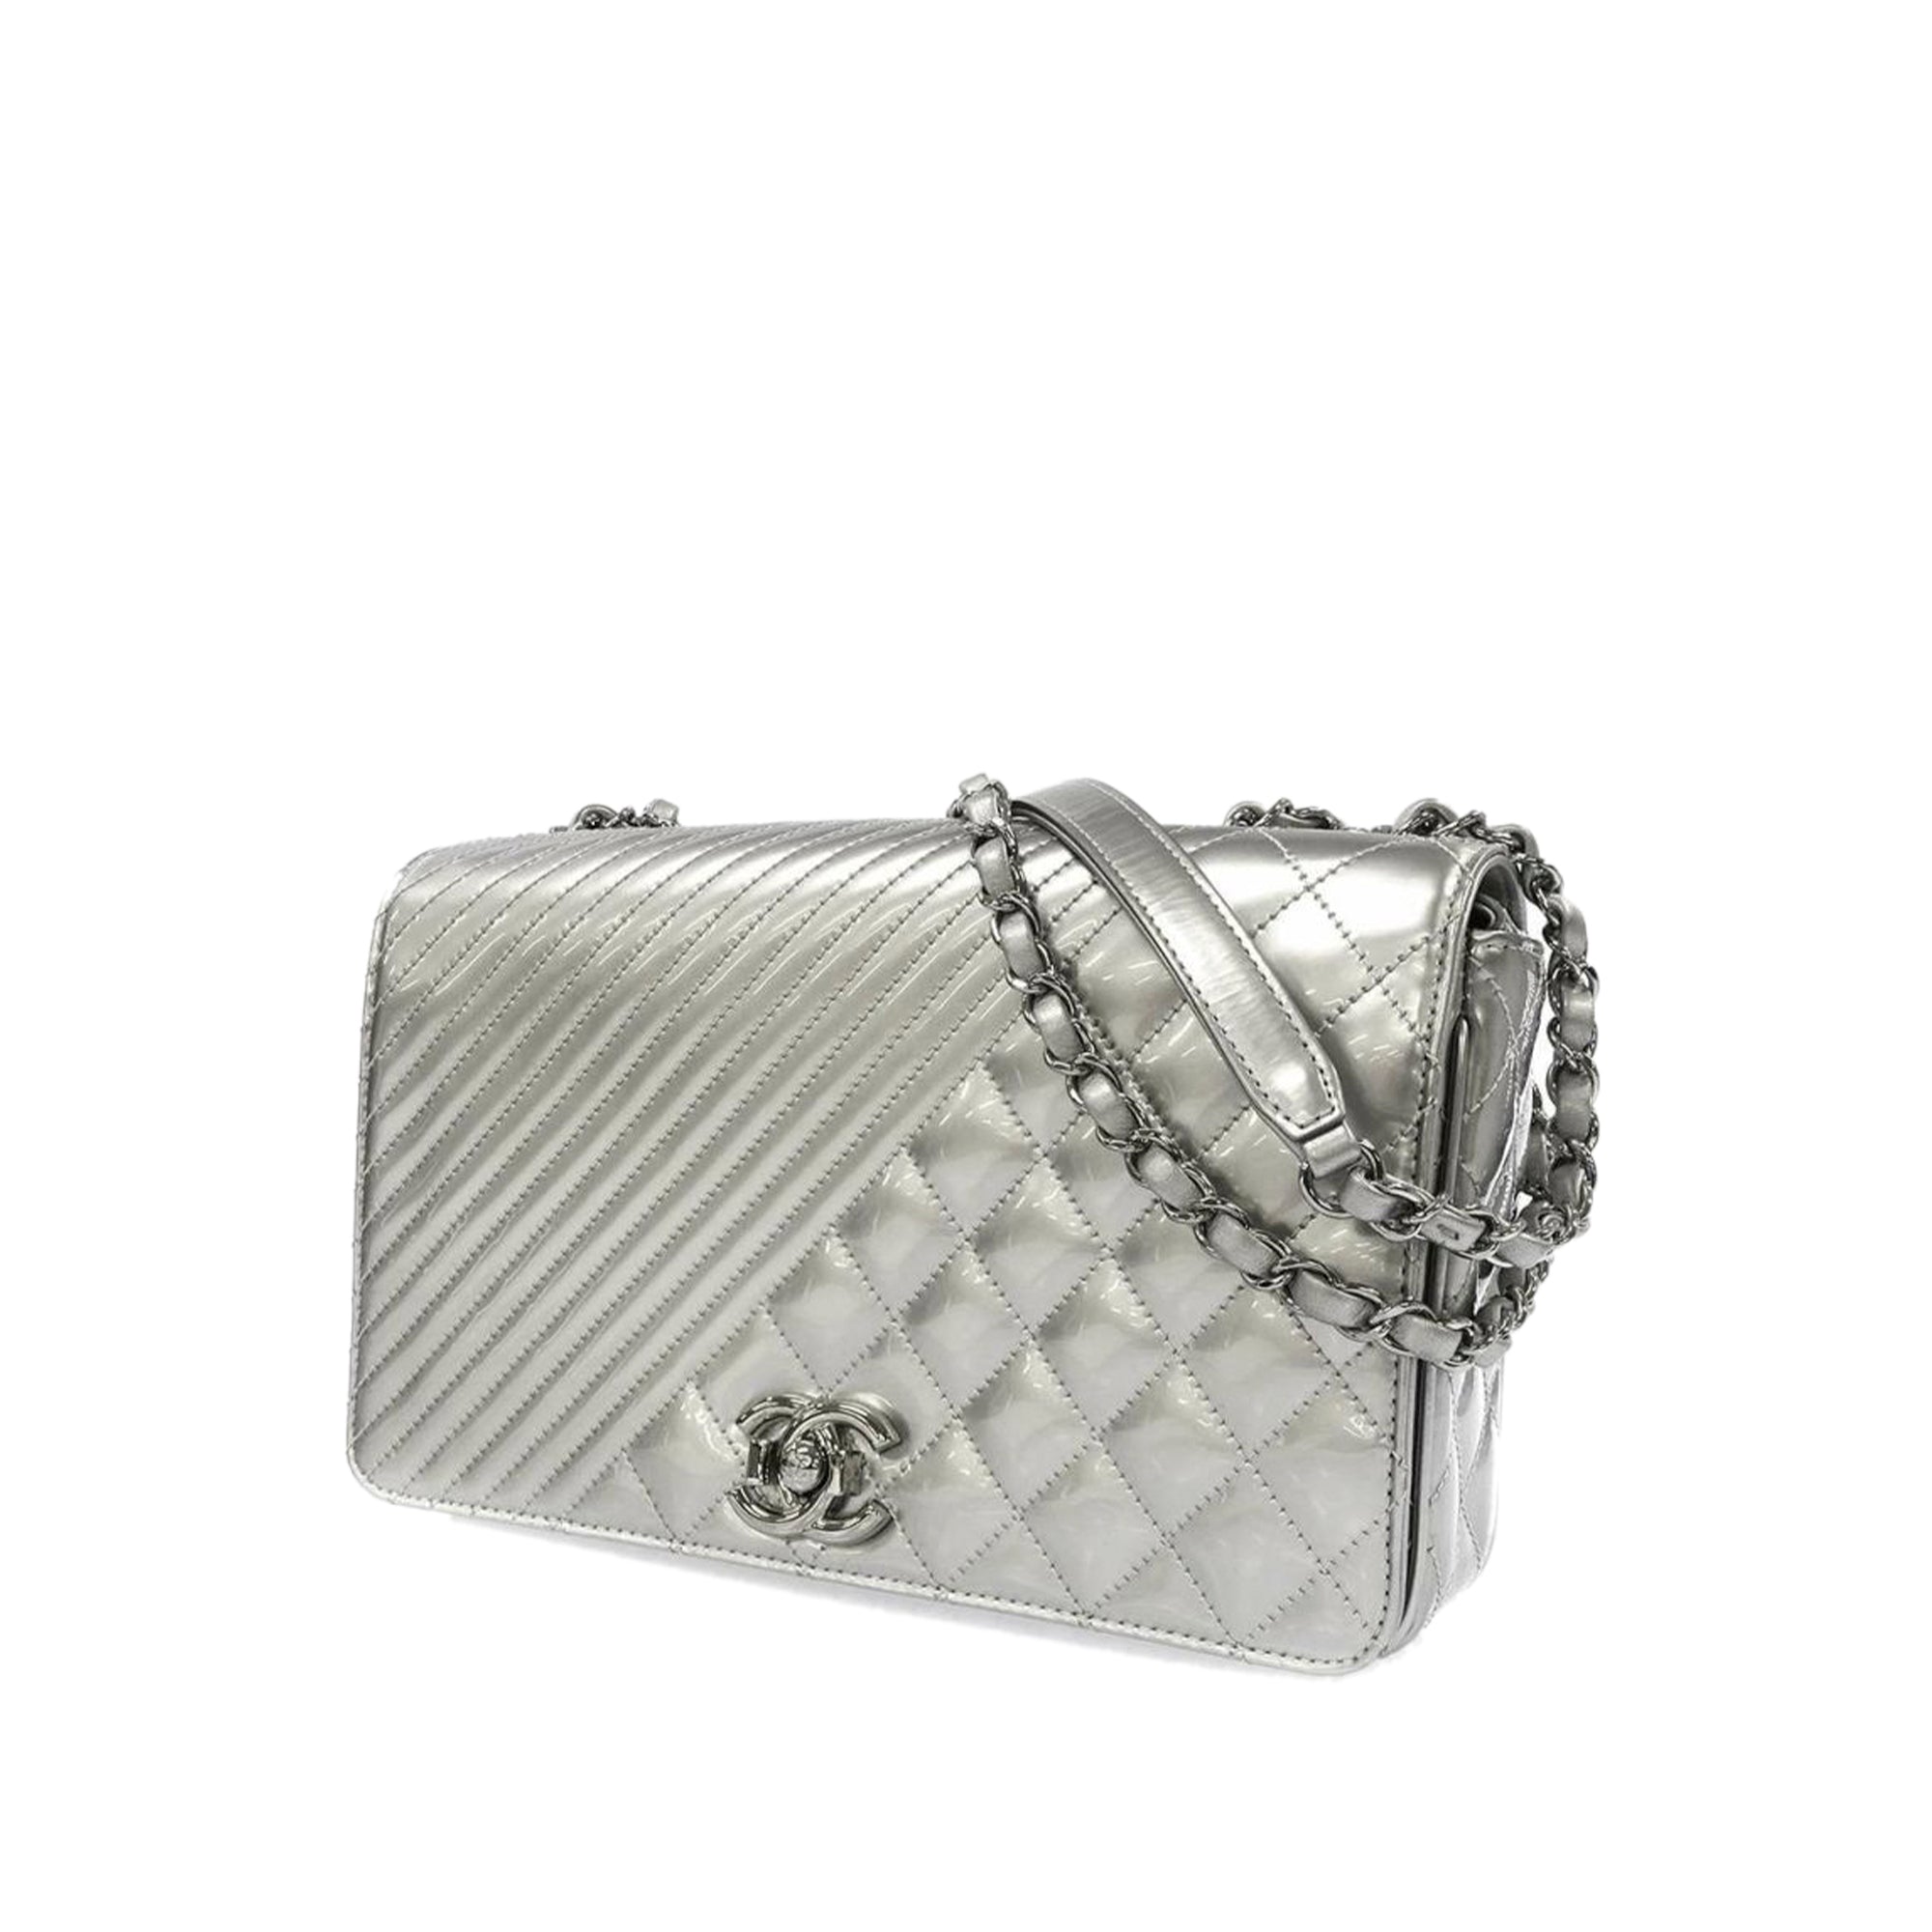 Silver Chanel Medium Patent Coco Boy Flap Bag